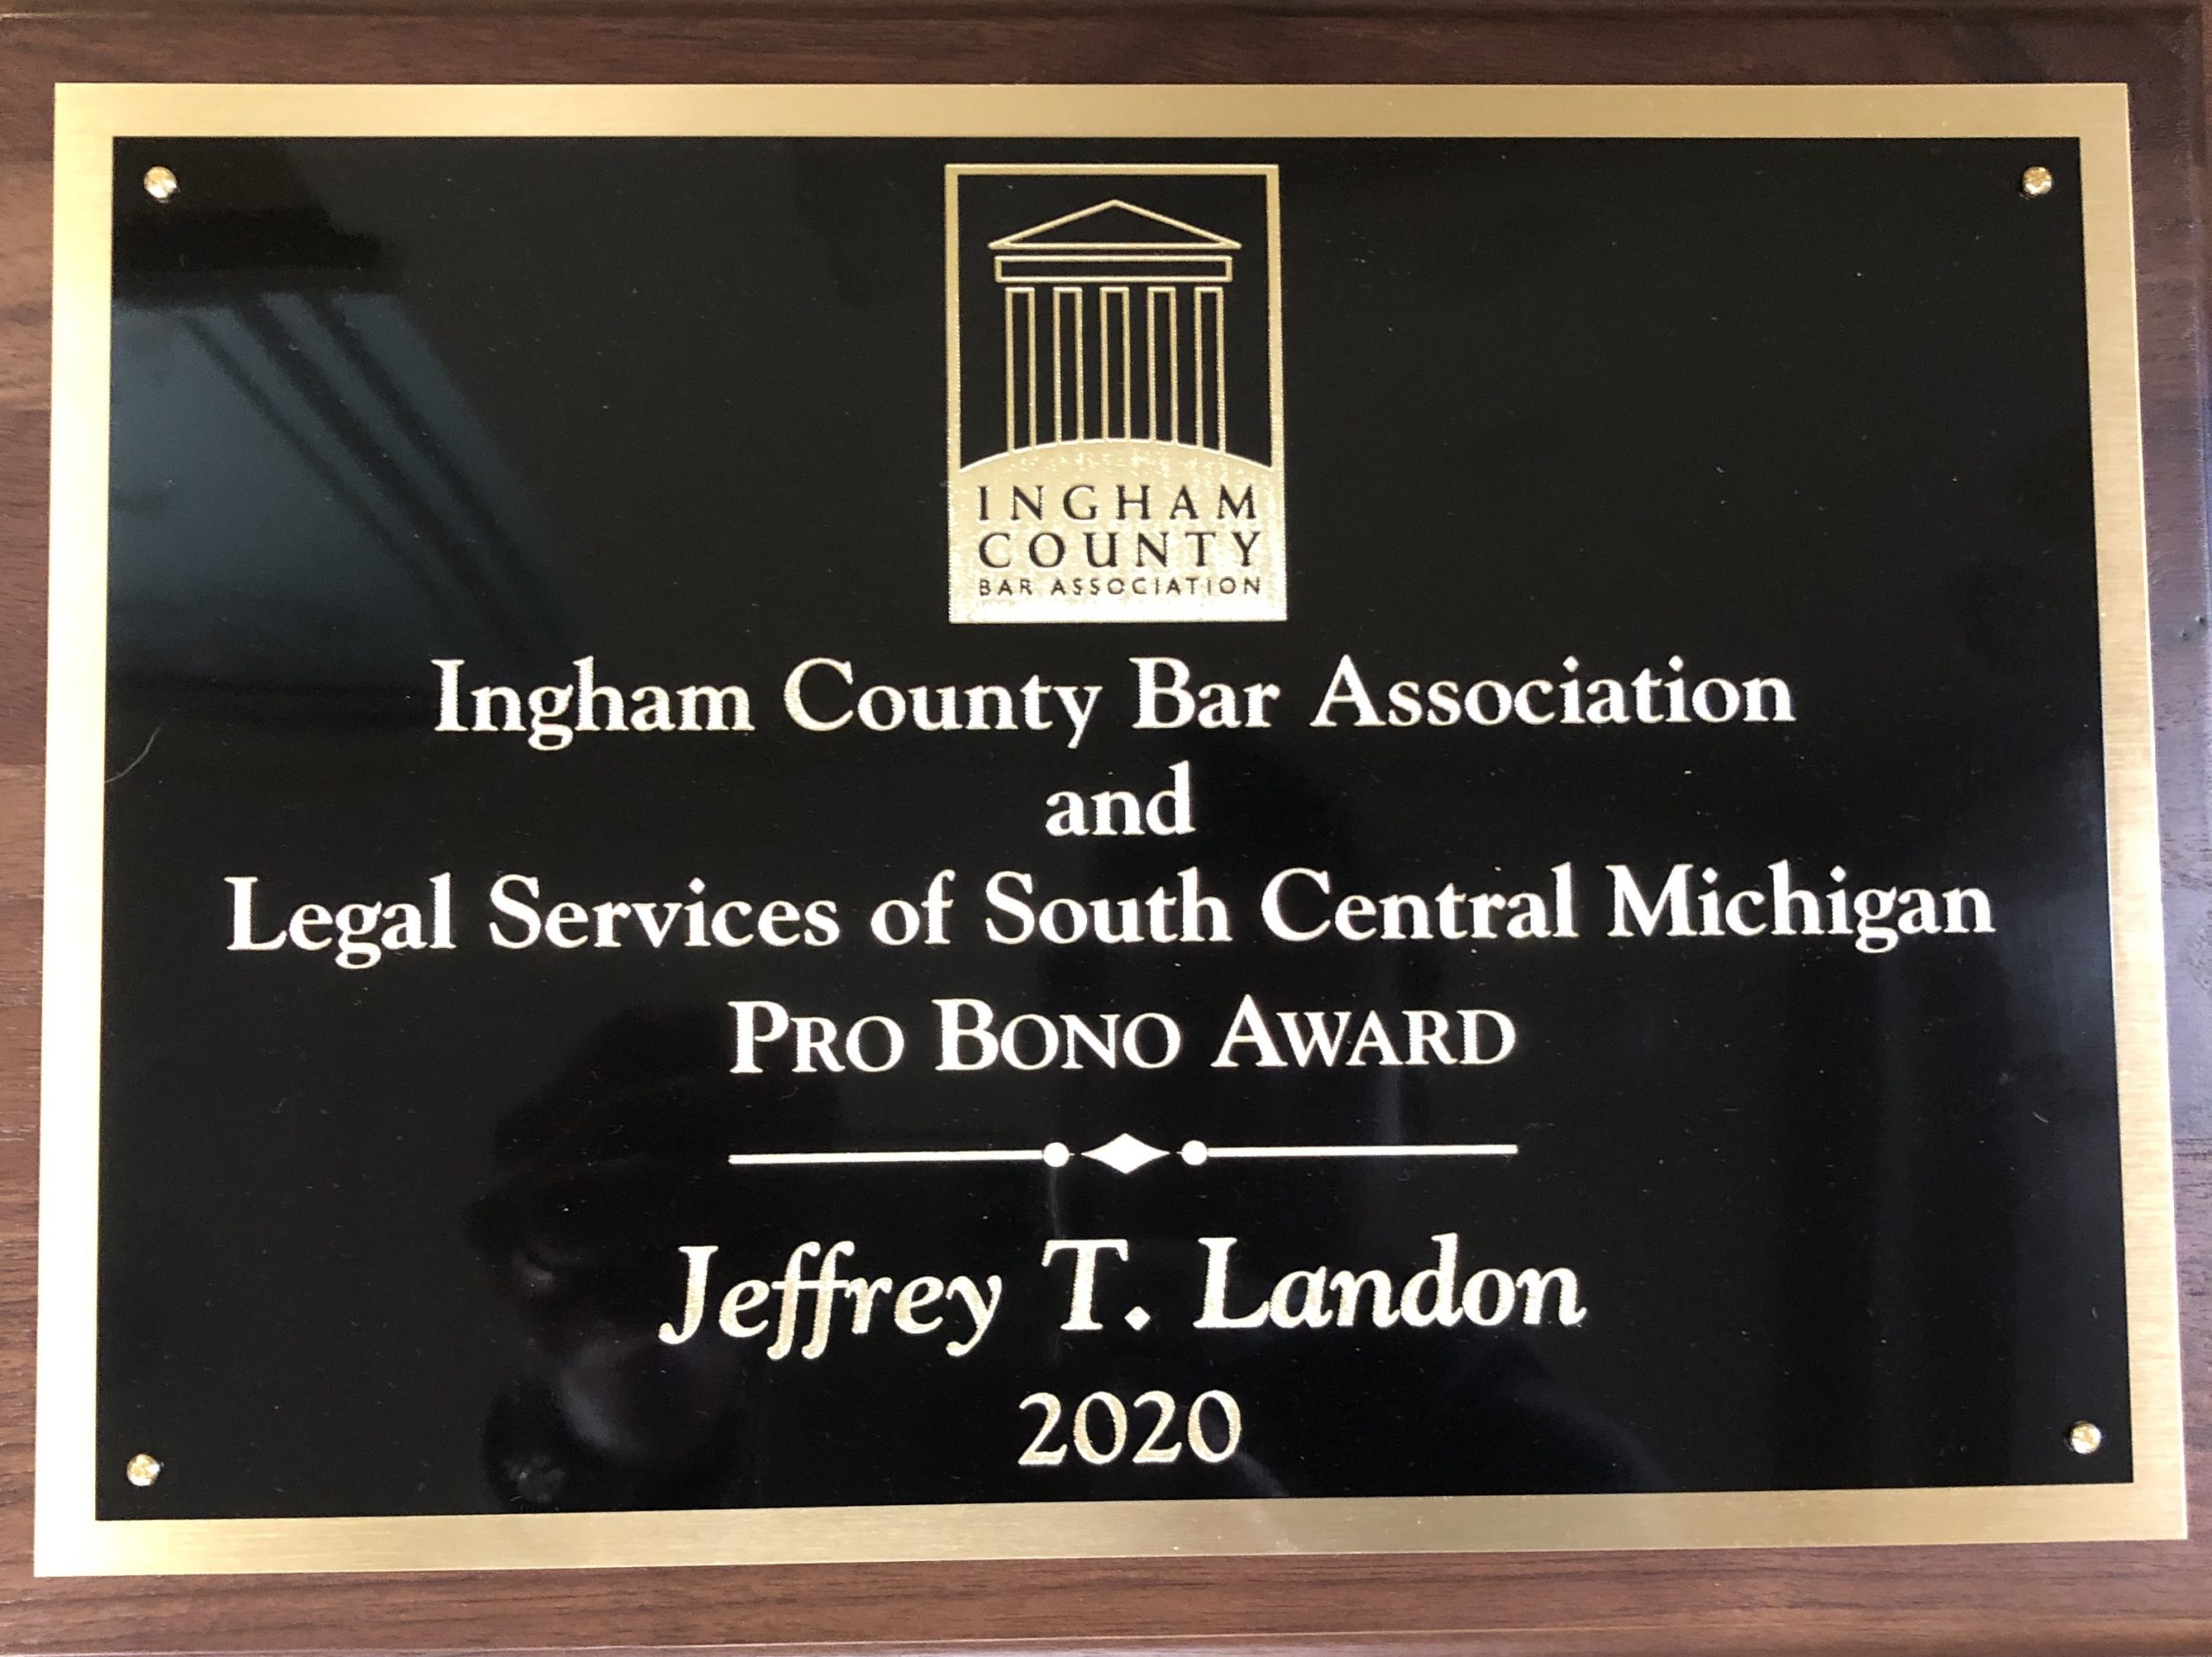 Pro Bono award granted to Jeffrey Landon